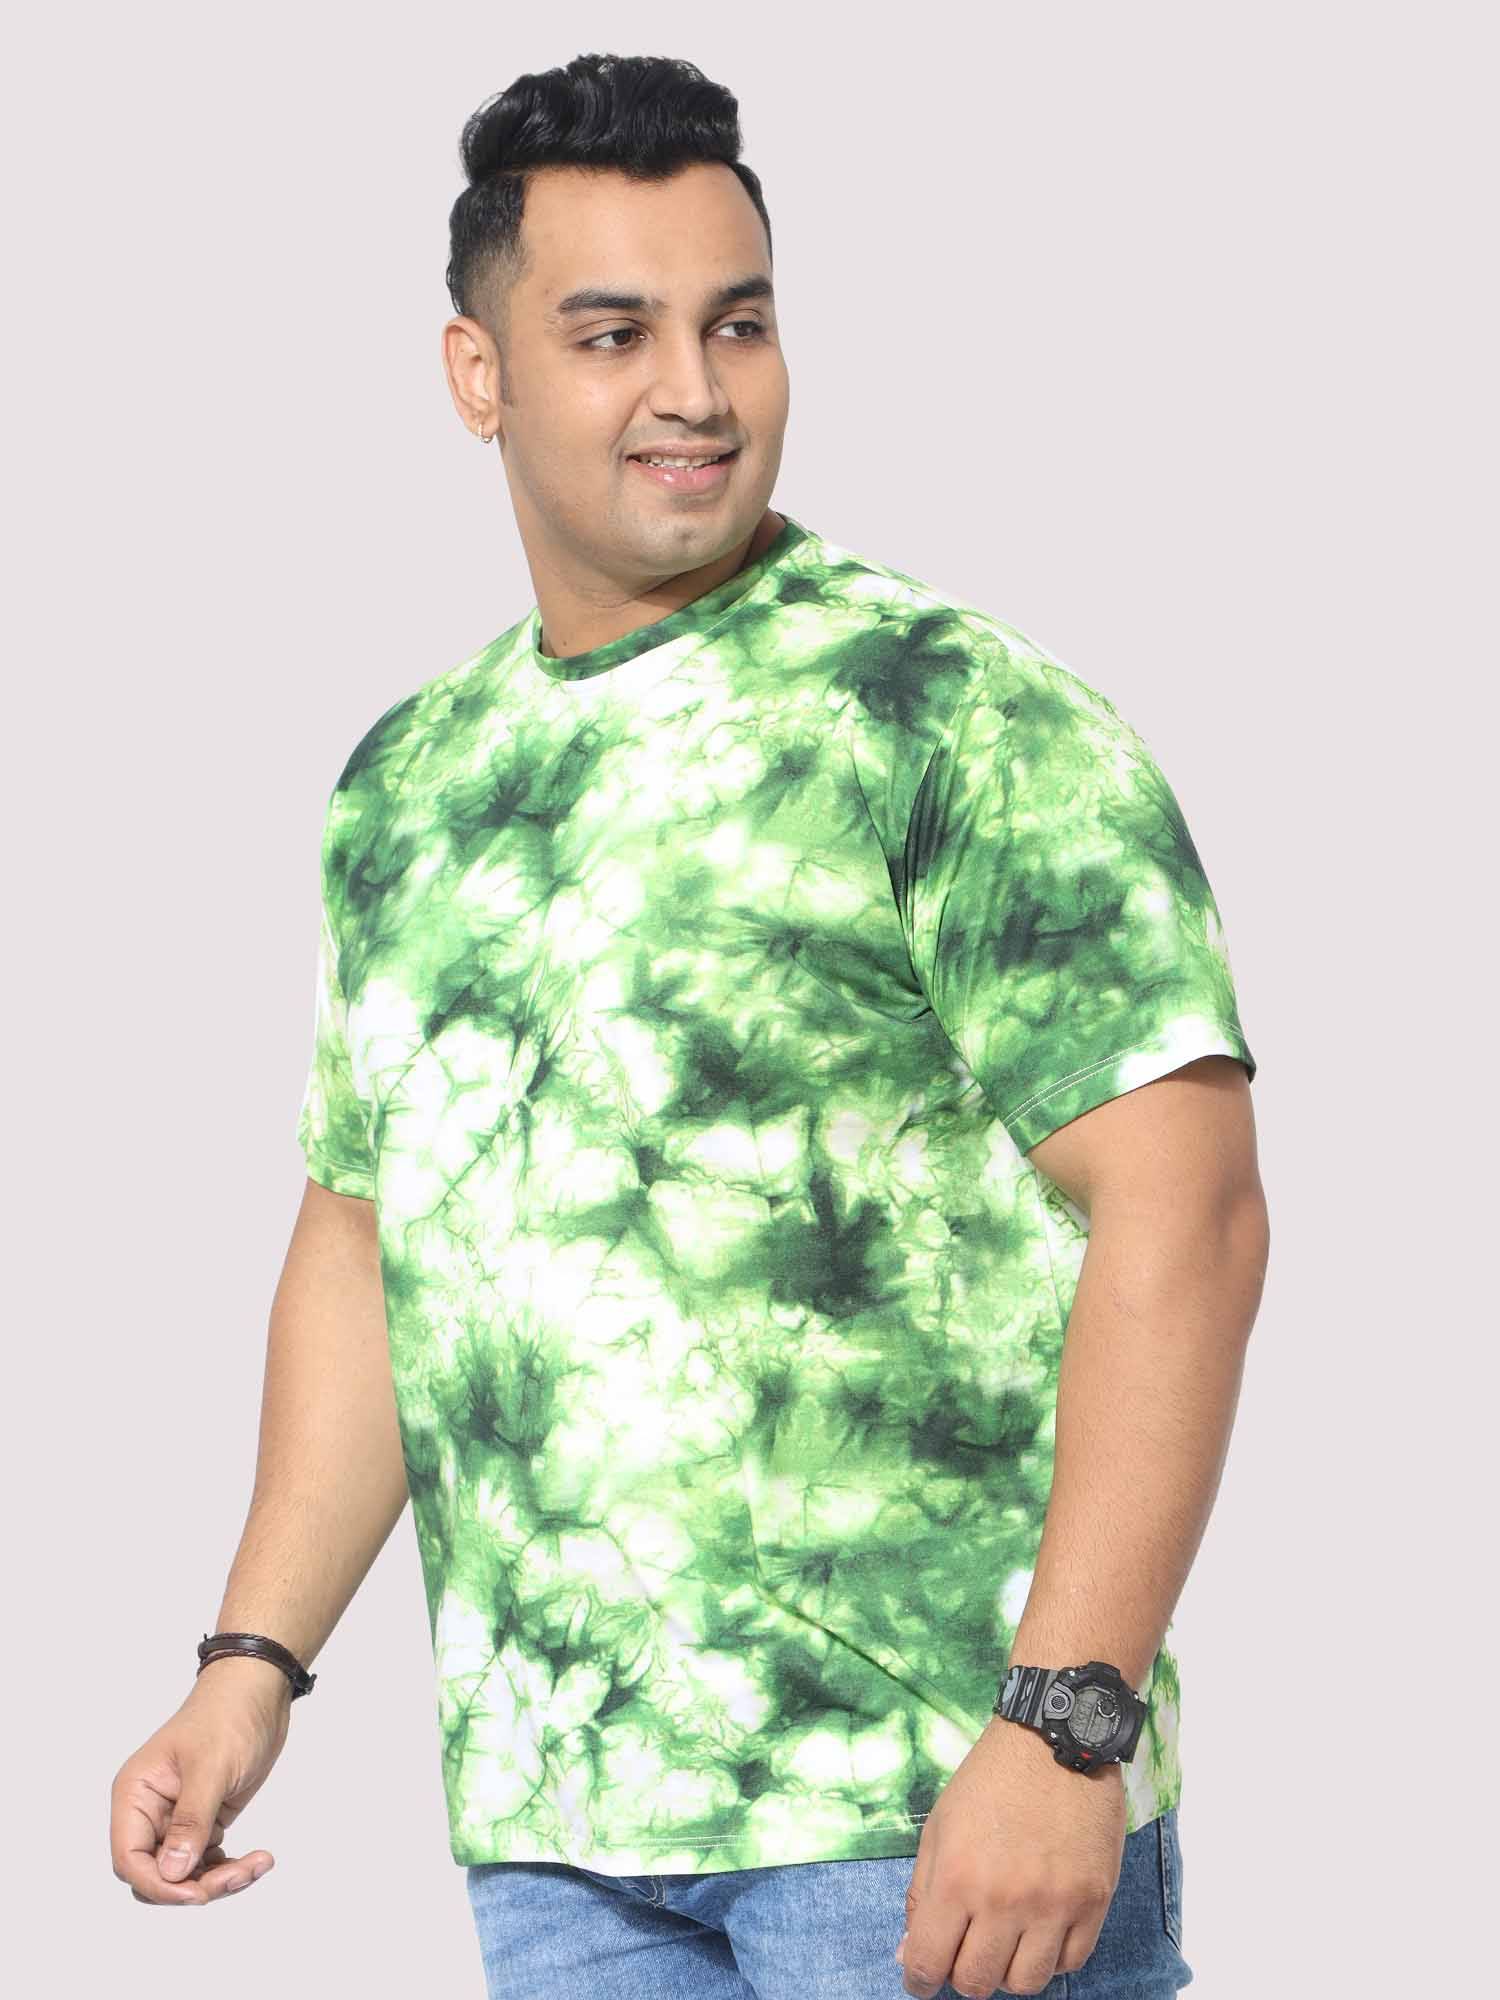 YoungLA Mens Tie Dye Green T-Shirt Short Sleeve Size Large 110/3